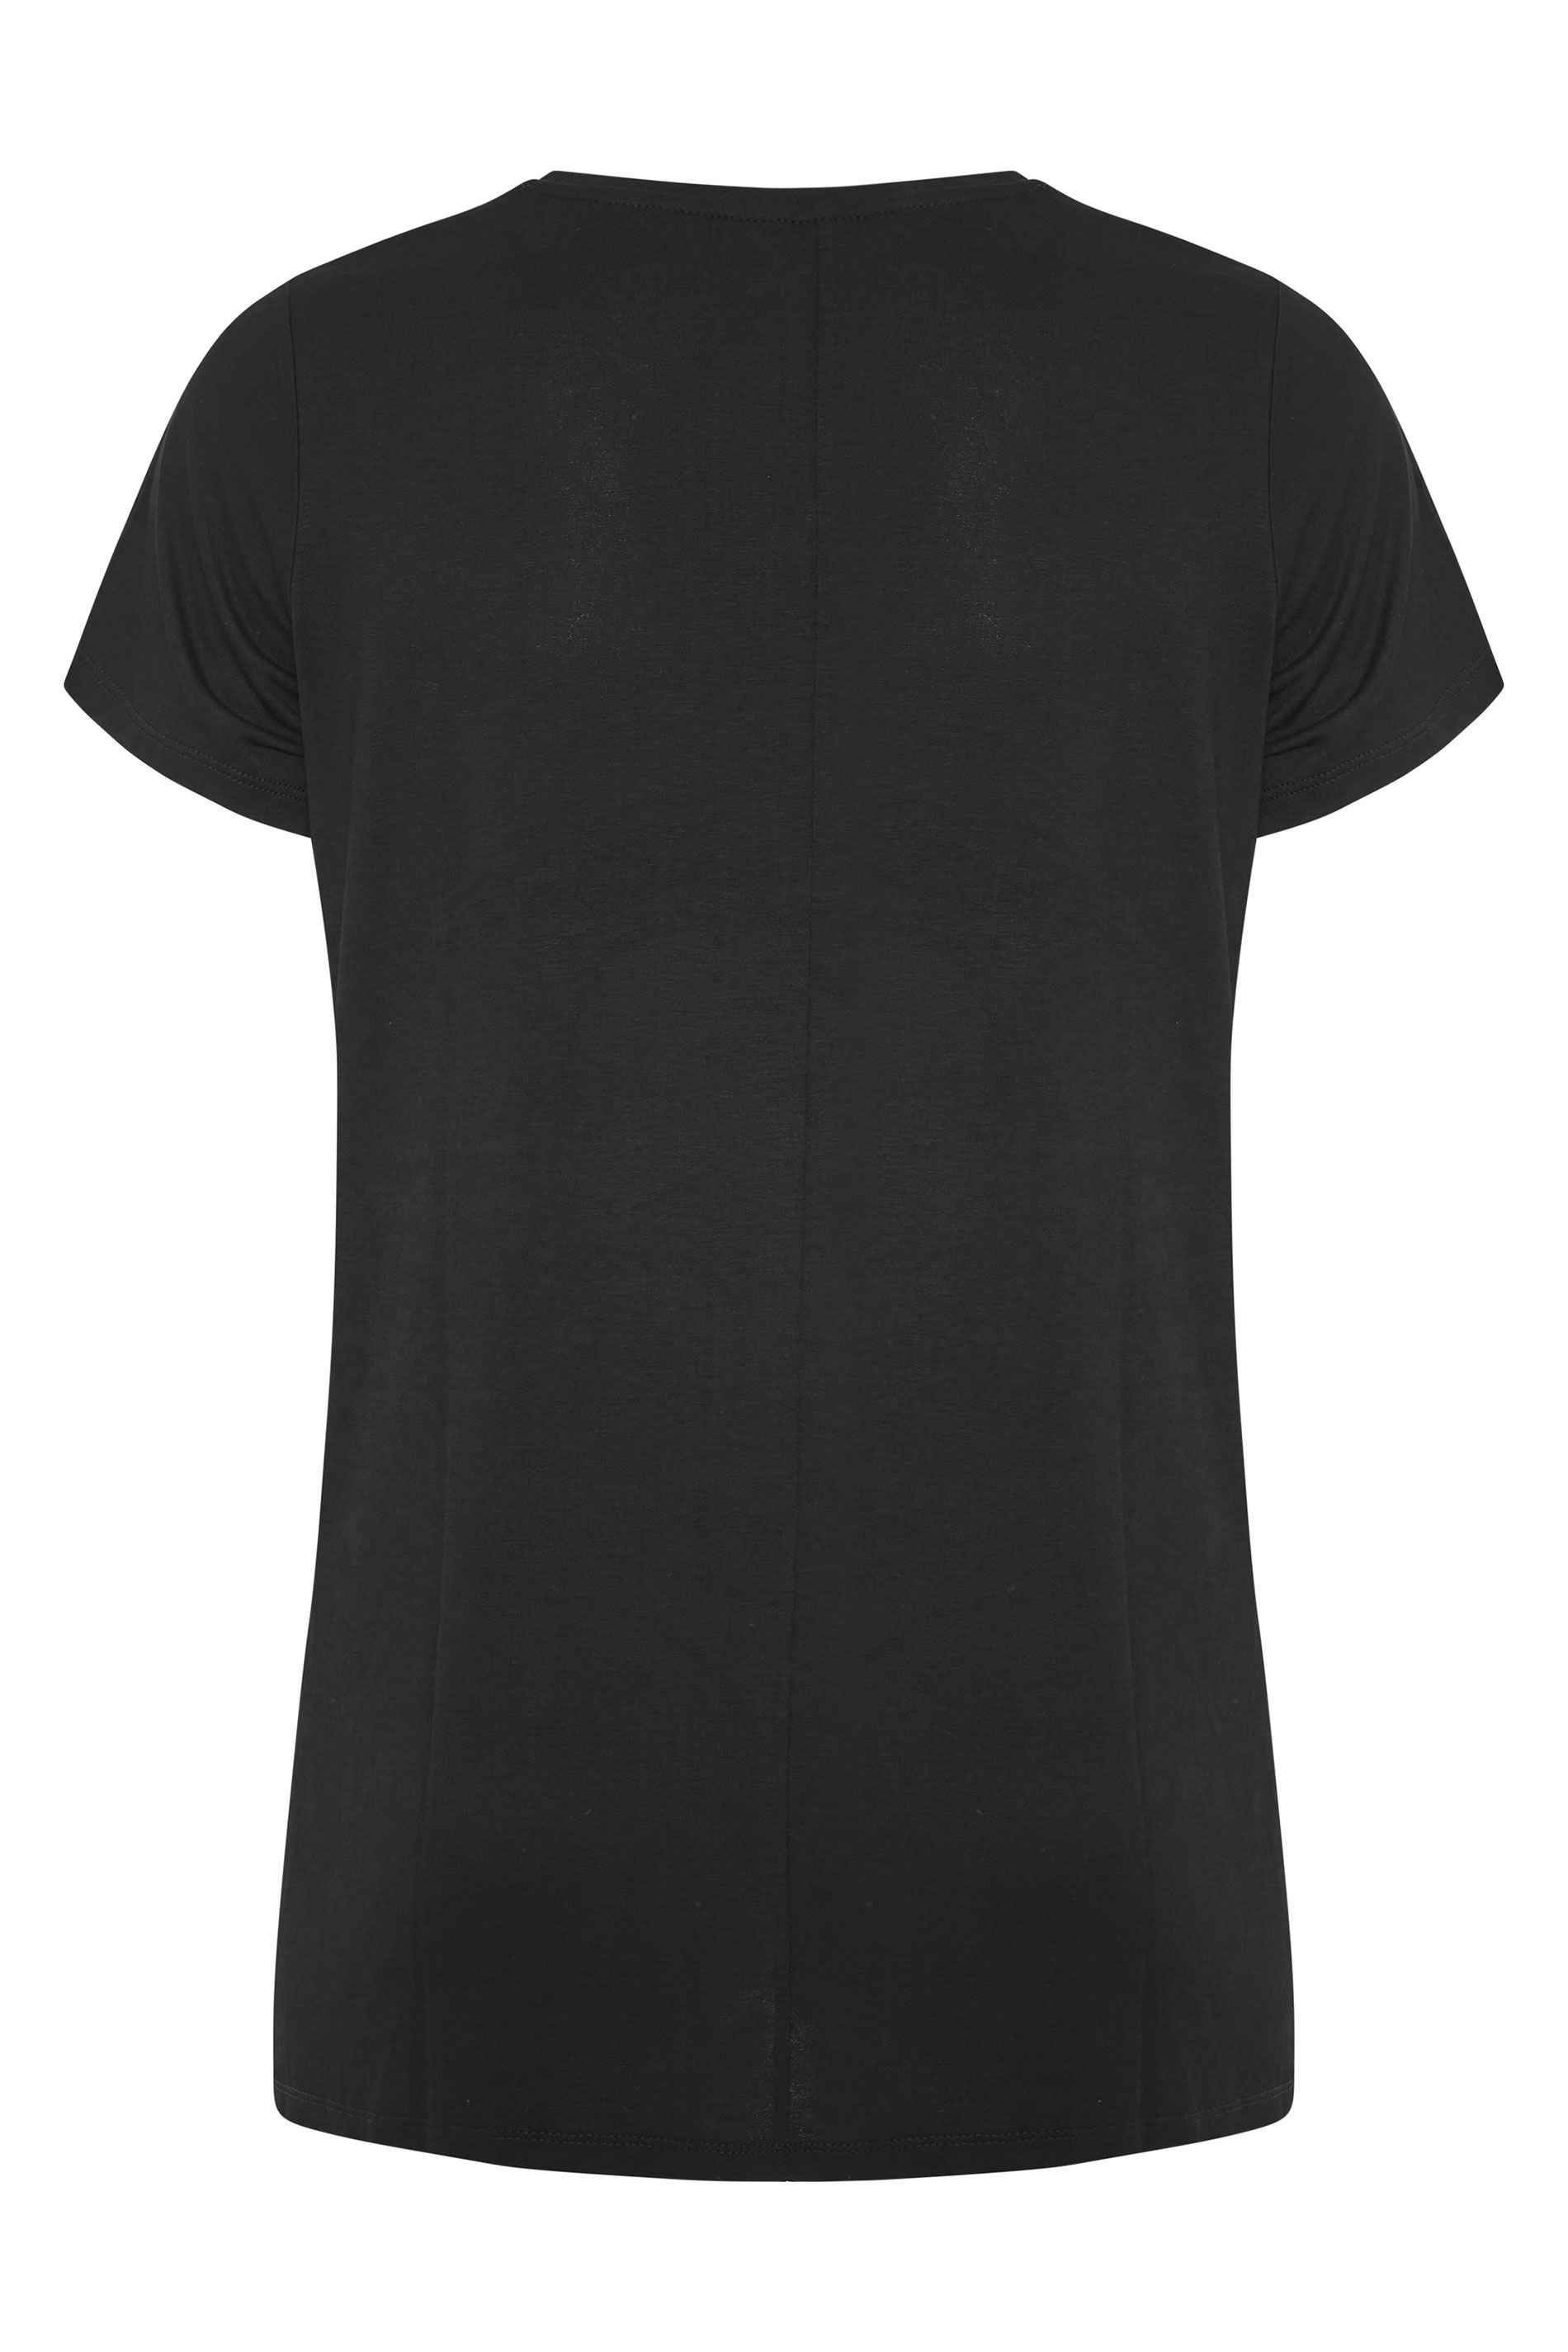 Grande taille  Tops Grande taille  Tops Casual | T-Shirt Noir Imprimé 'Beauty' - YW21552